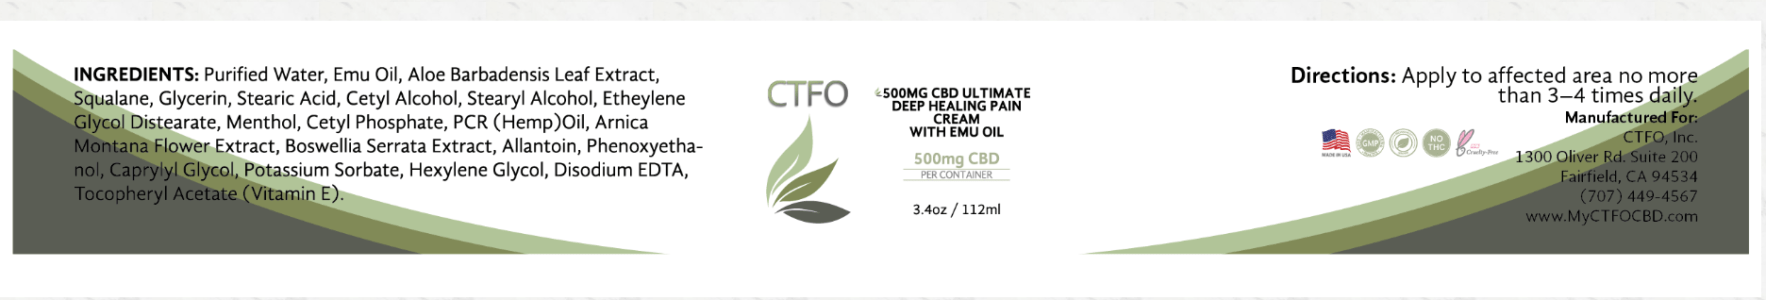 ctfo cbd ultimate deep healing pain cream with emu oil label